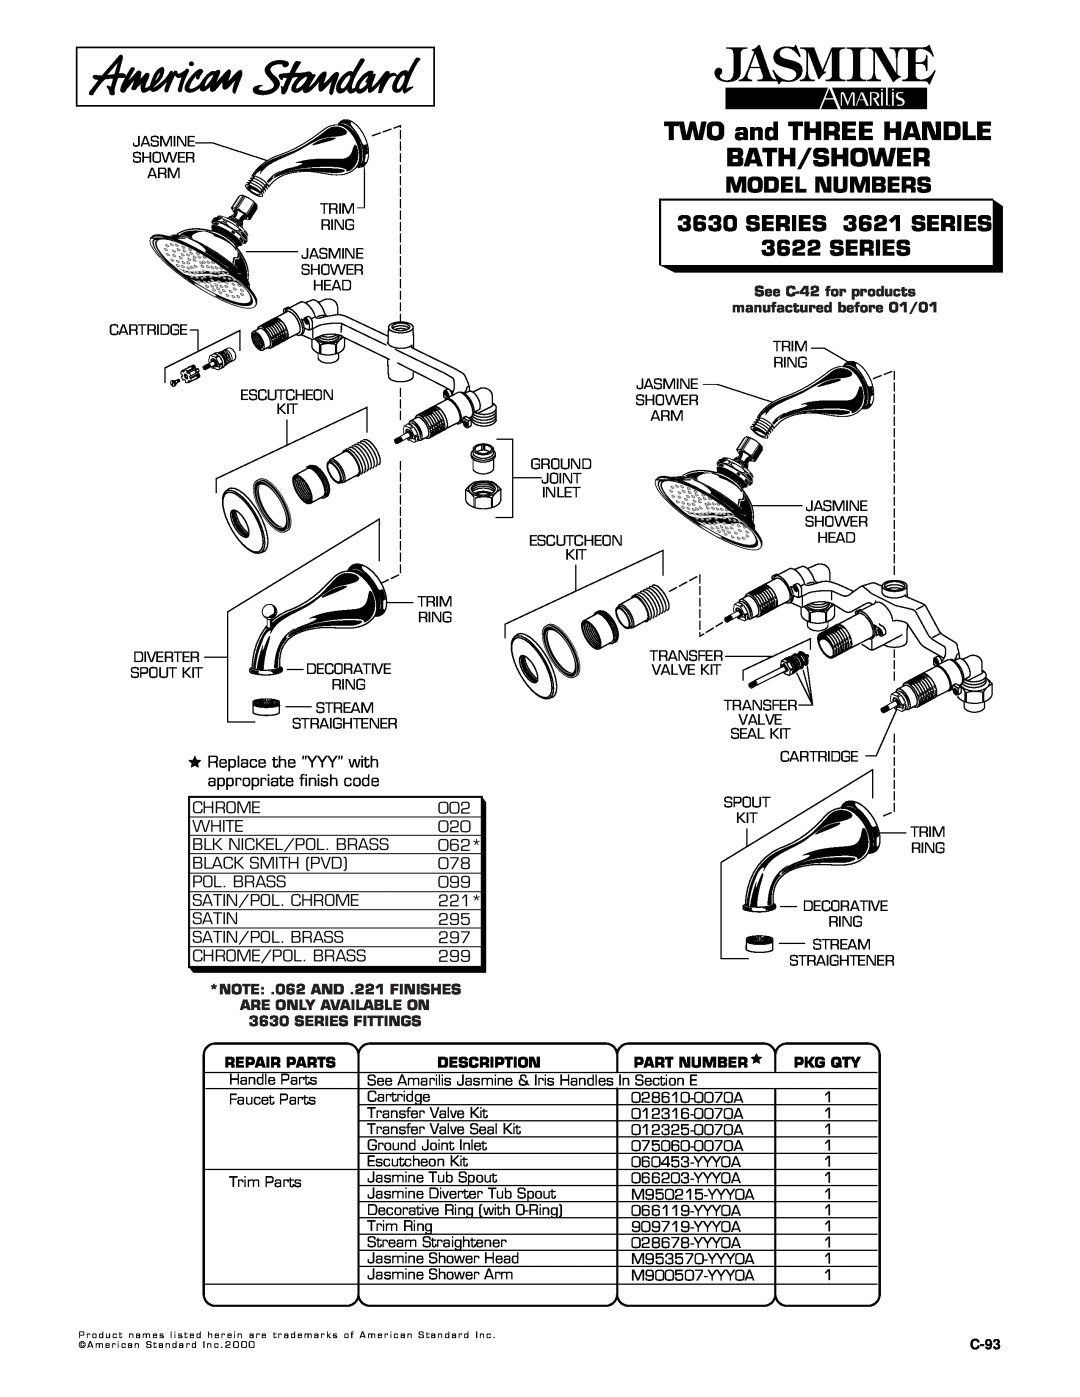 American Standard 3621 Series manual TWO and THREE HANDLE BATH/SHOWER, MODEL NUMBERS 3630 SERIES 3621 SERIES 3622 SERIES 